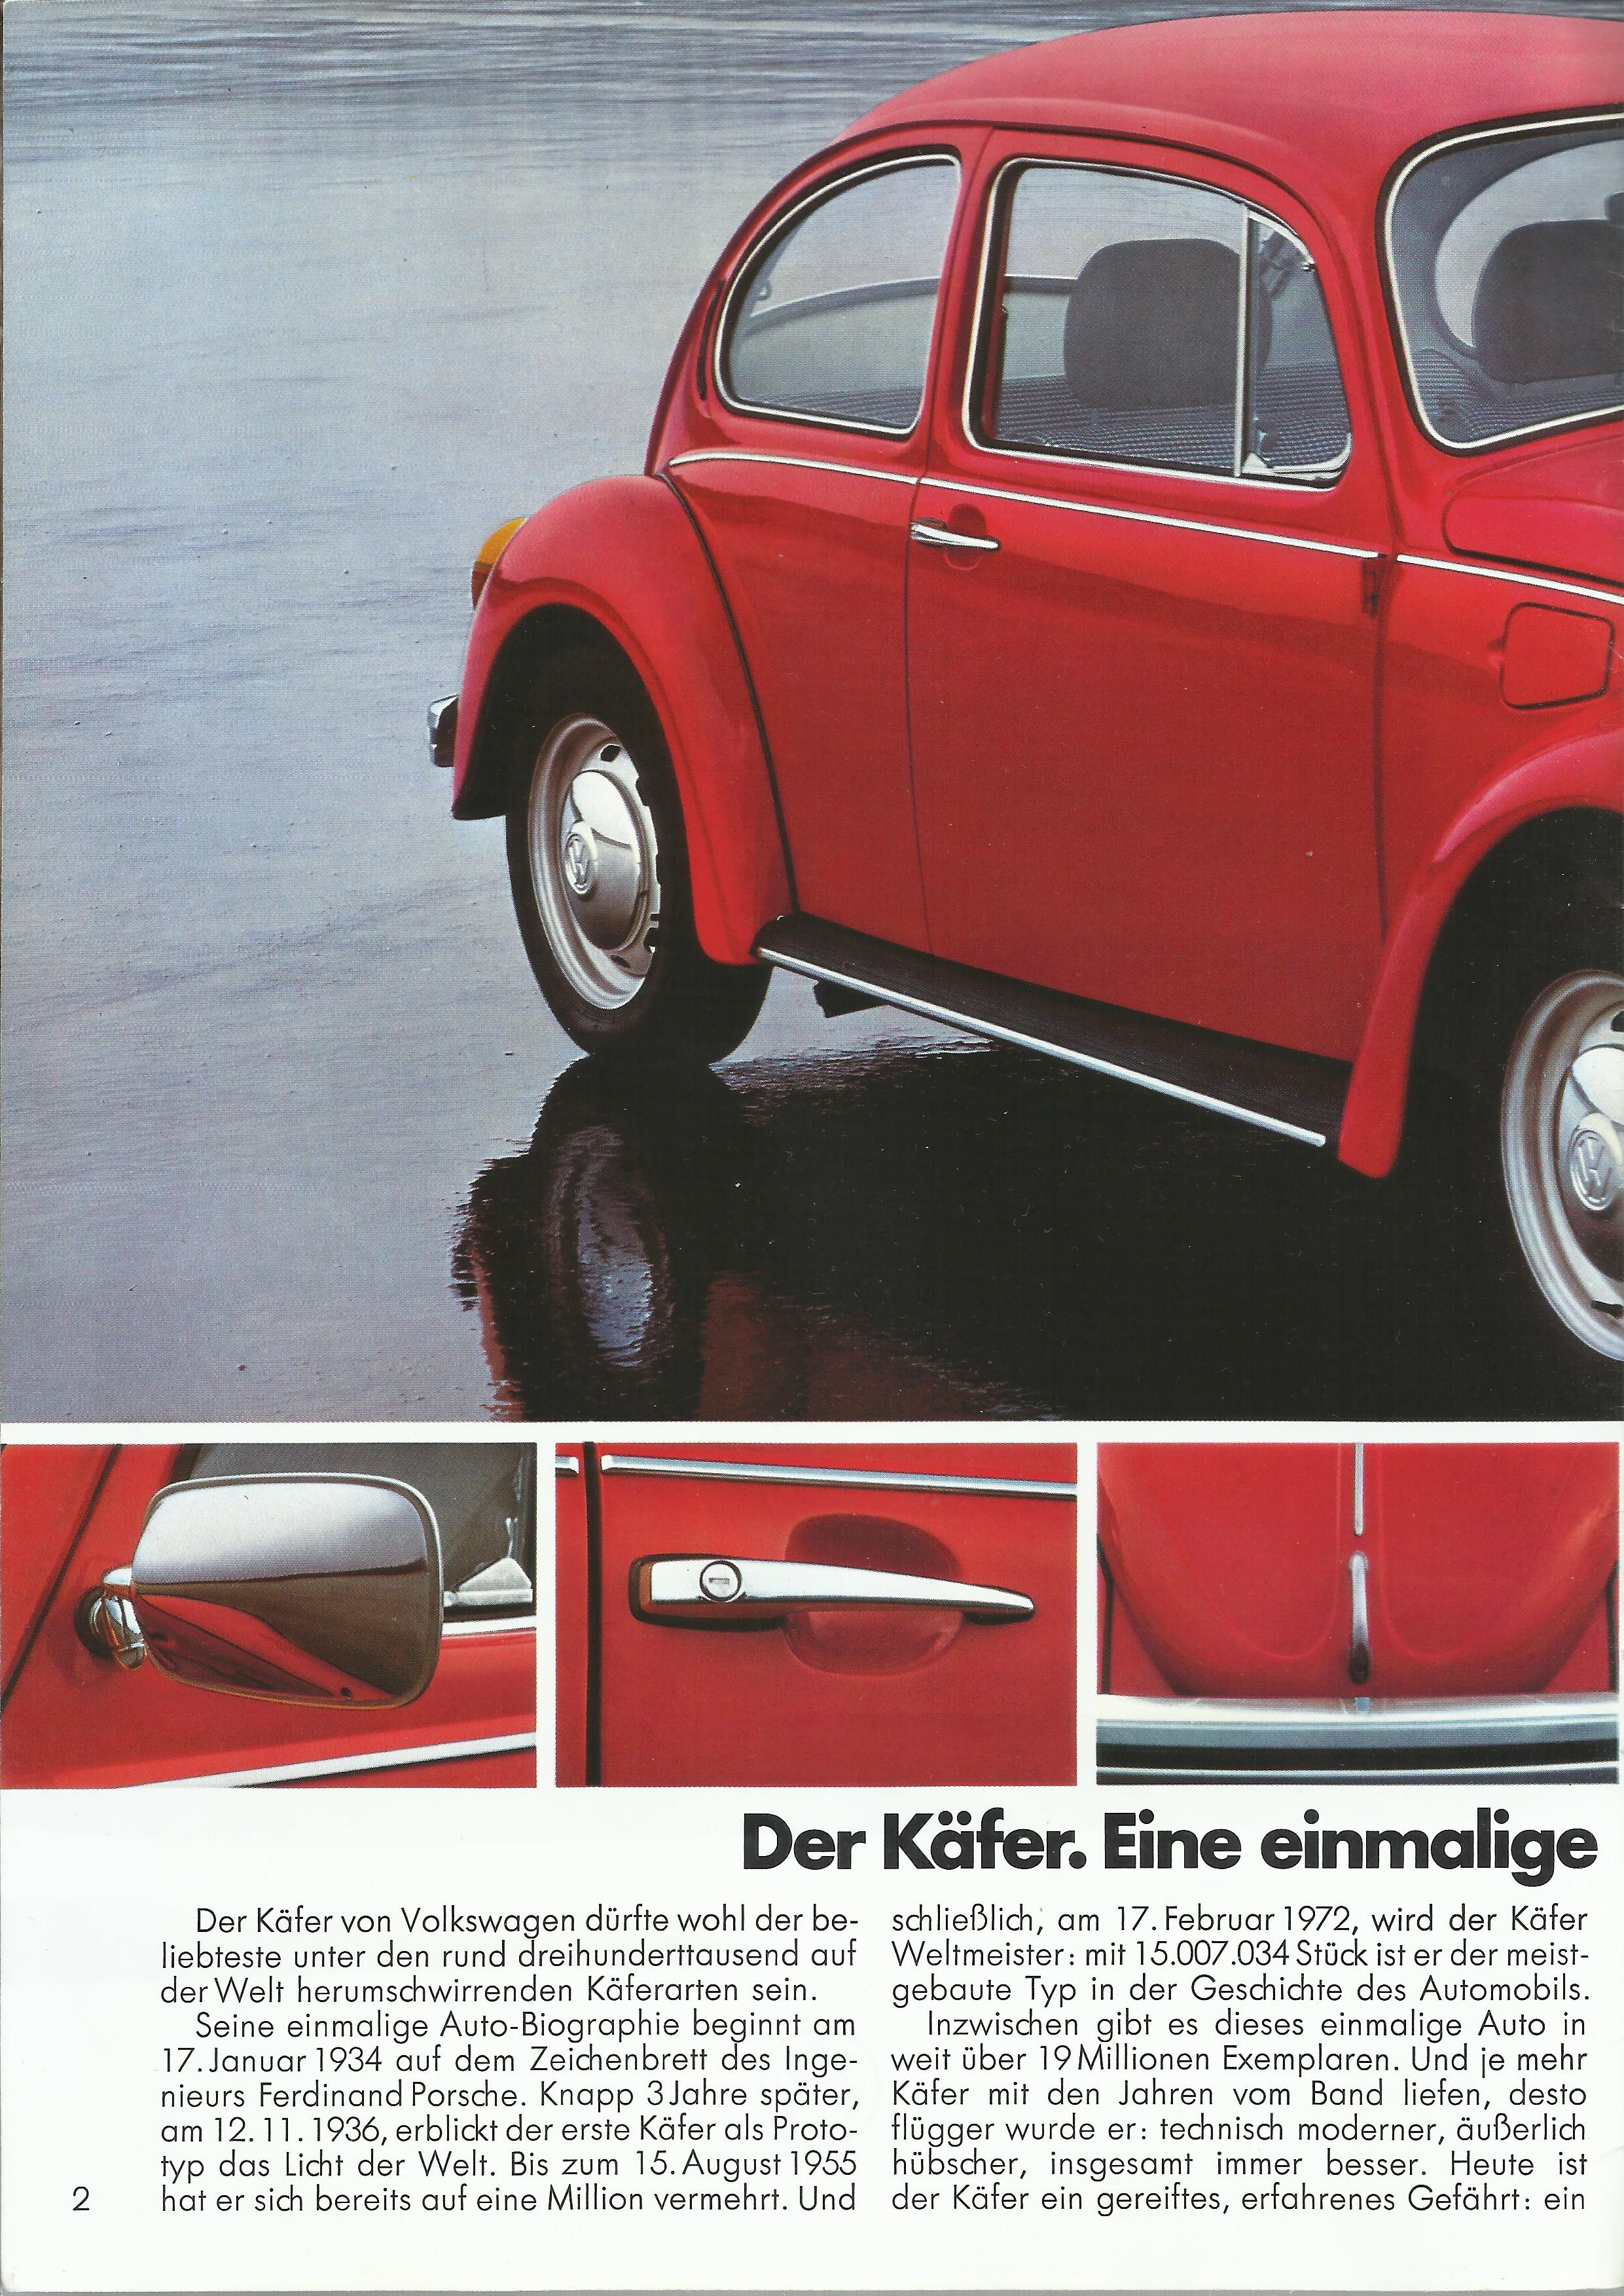 TheSamba.com :: VW Archives - 1979 VW Beetle Brochure - German